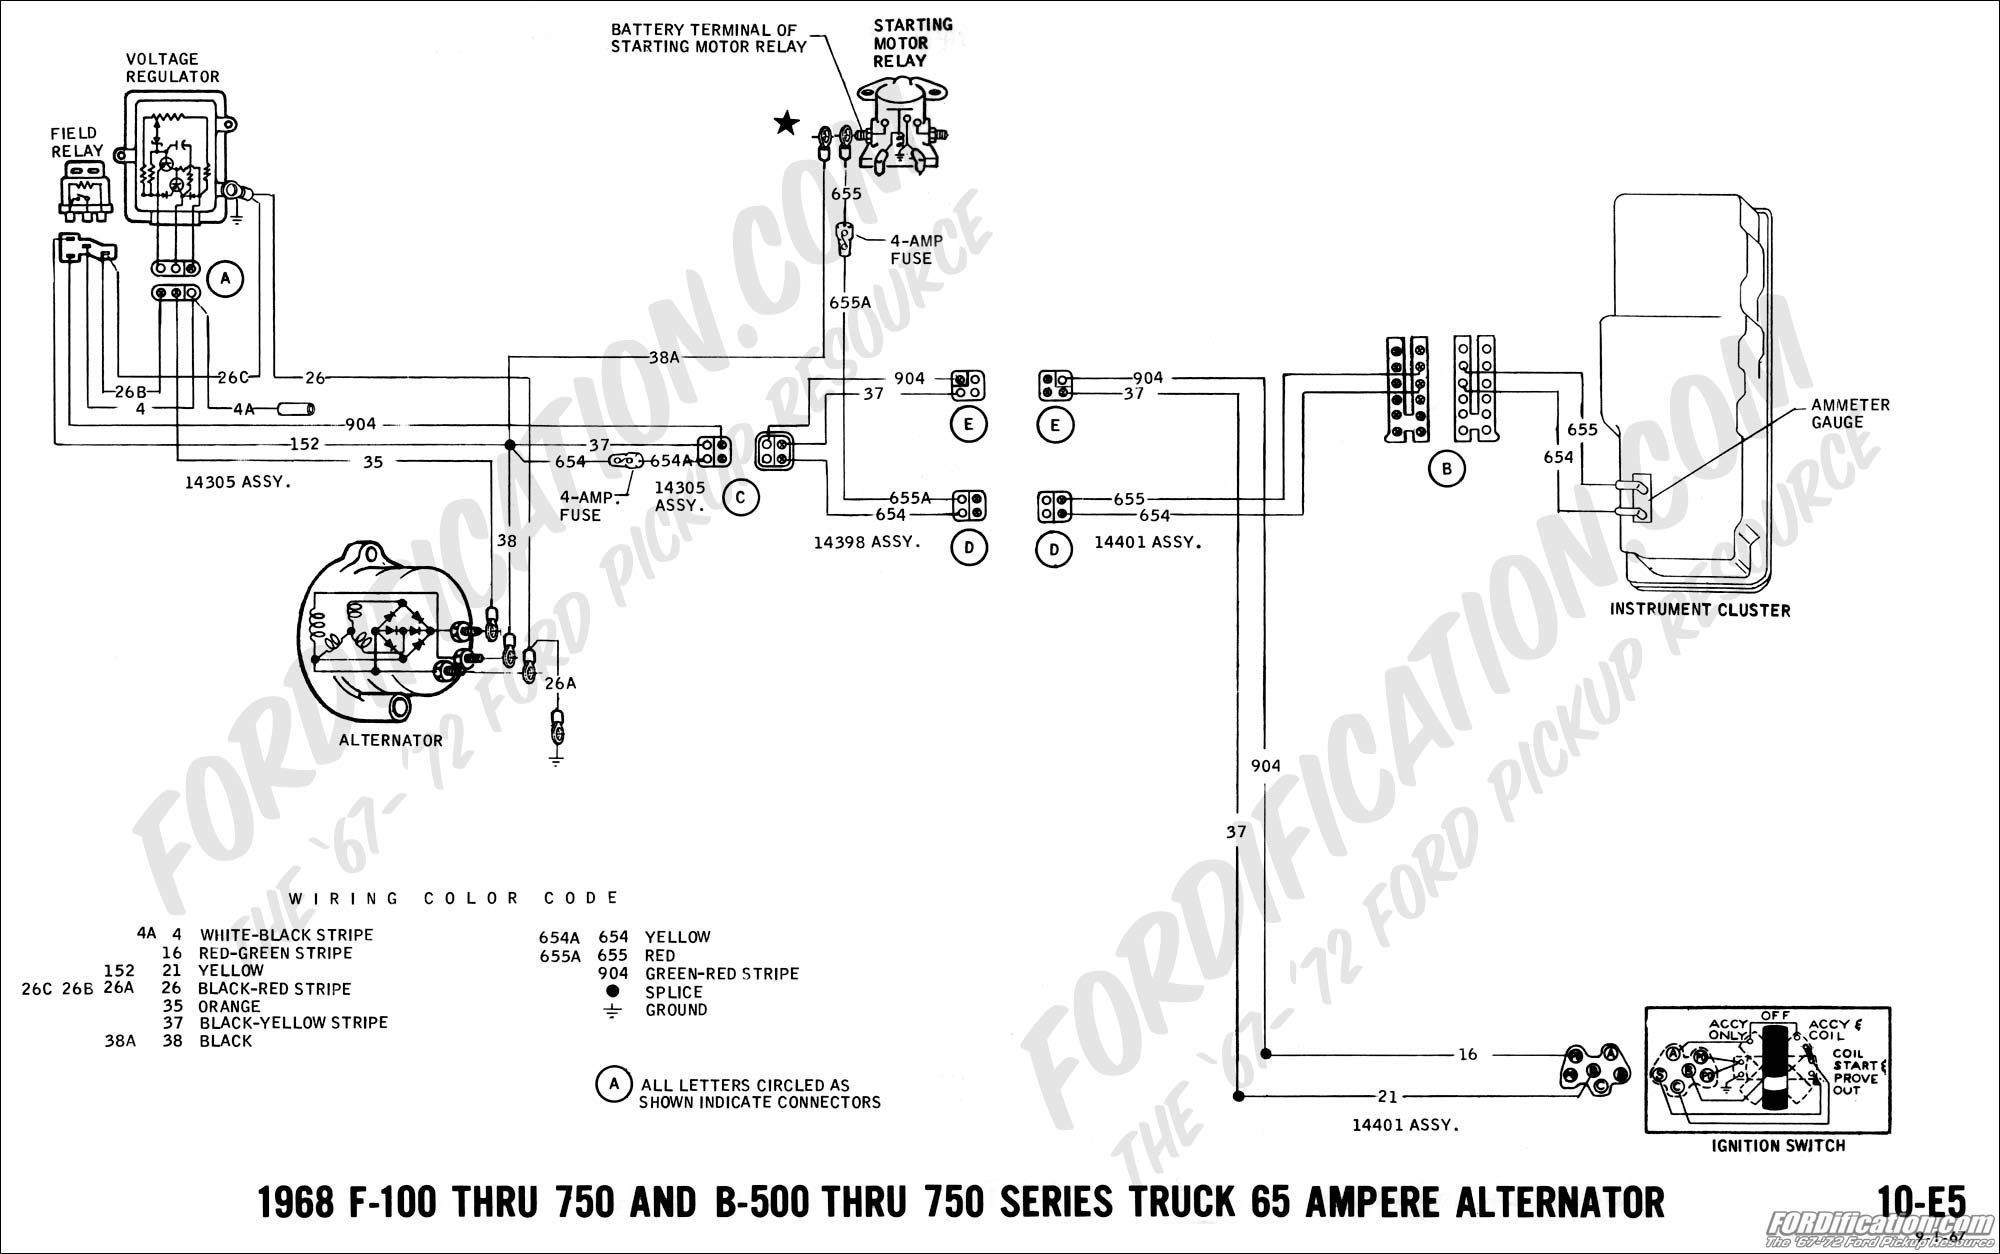 Wiring Diagram Voltage Regulator to Alternator Best Alternator Wiring Diagram Honda Best Wiring Diagram Alternator